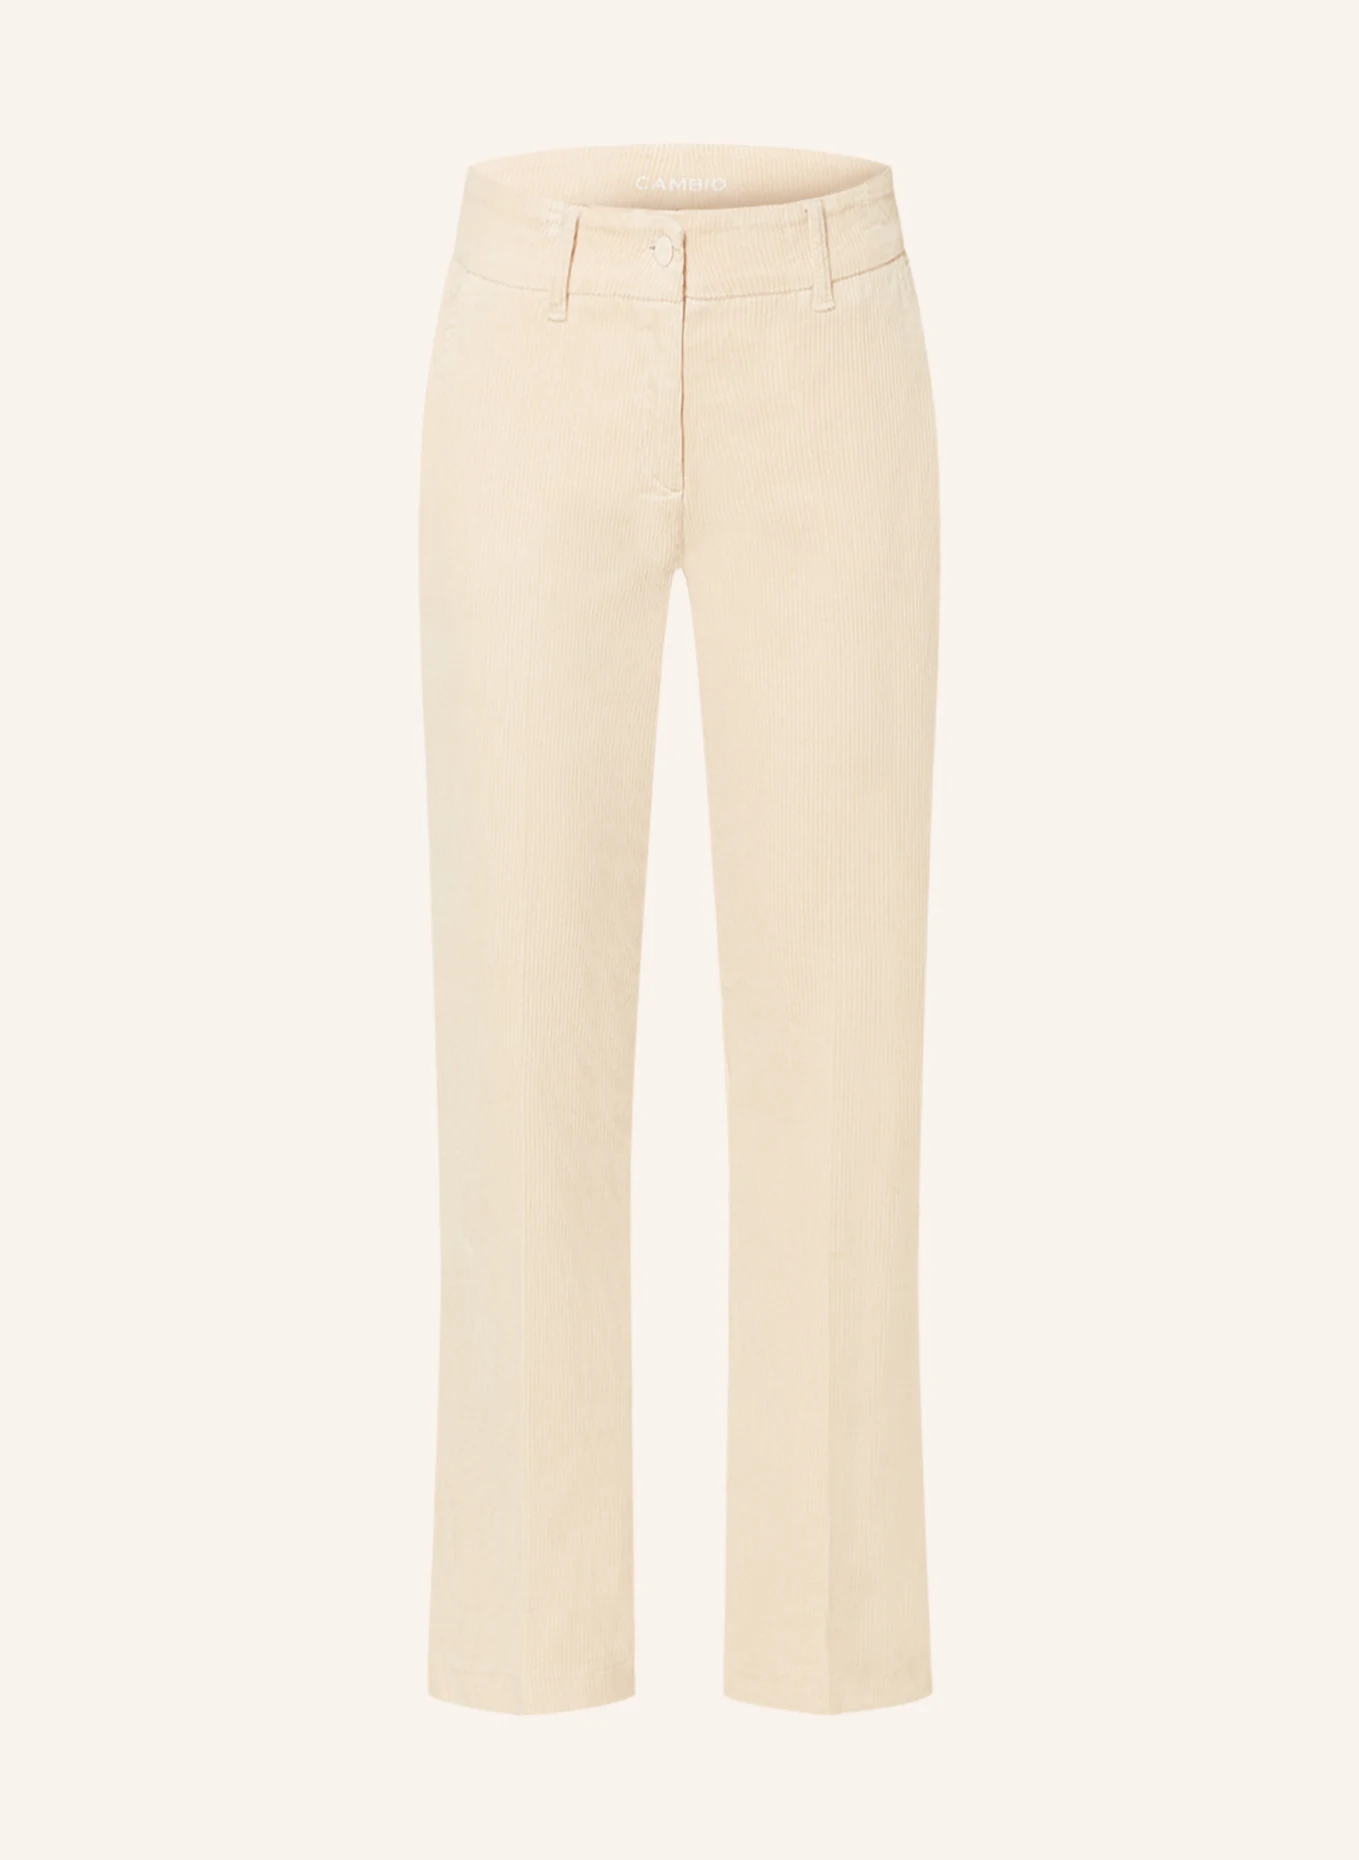 CAMBIO pantalón chino en pana color beige - 2